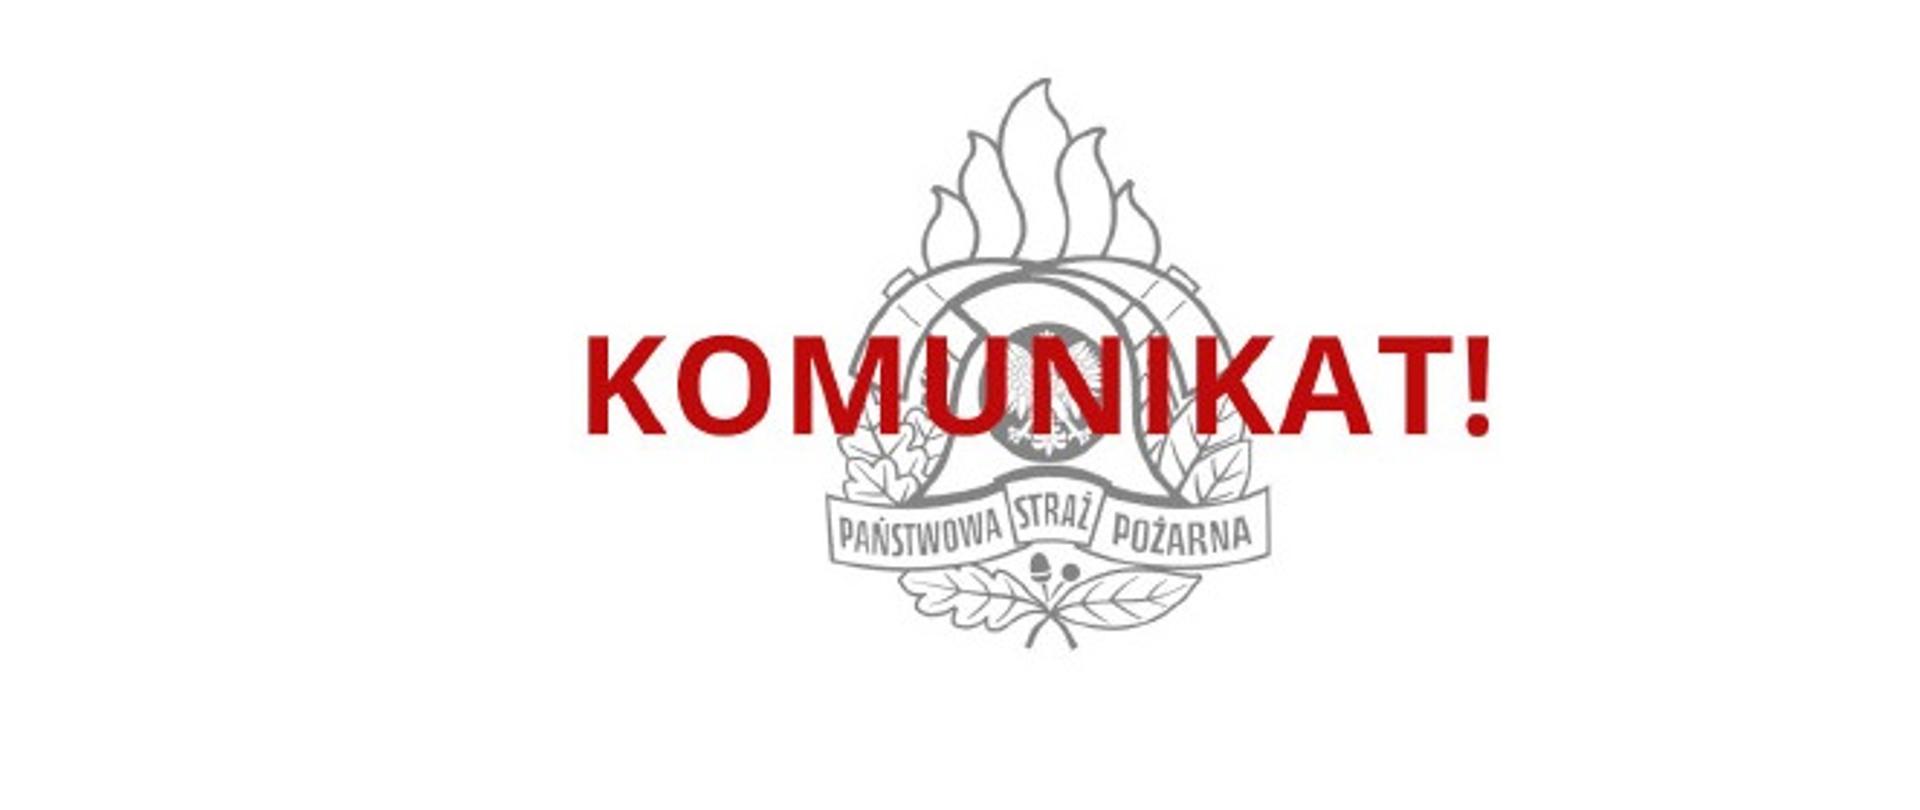 Napis komunikat na logo straży pożarnej 